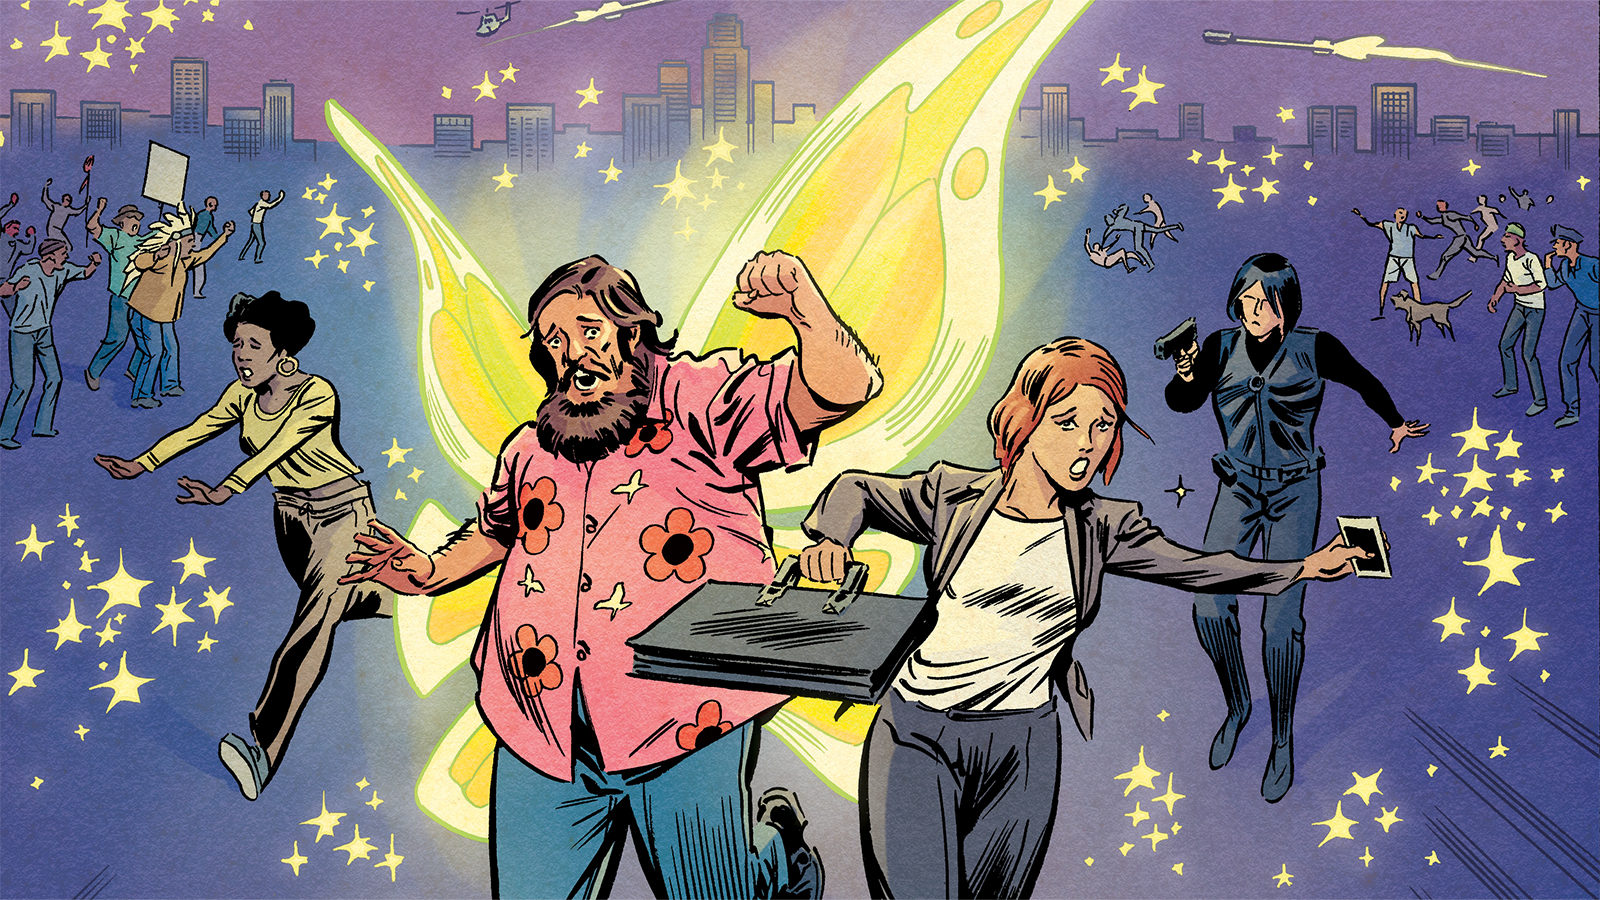 Legendary Comics Announces New Fantasy RomCom Original Graphic Novel Three Little Wishes by Award-winning Author Paul Cornell and Reveals Sneak Peek of the Art